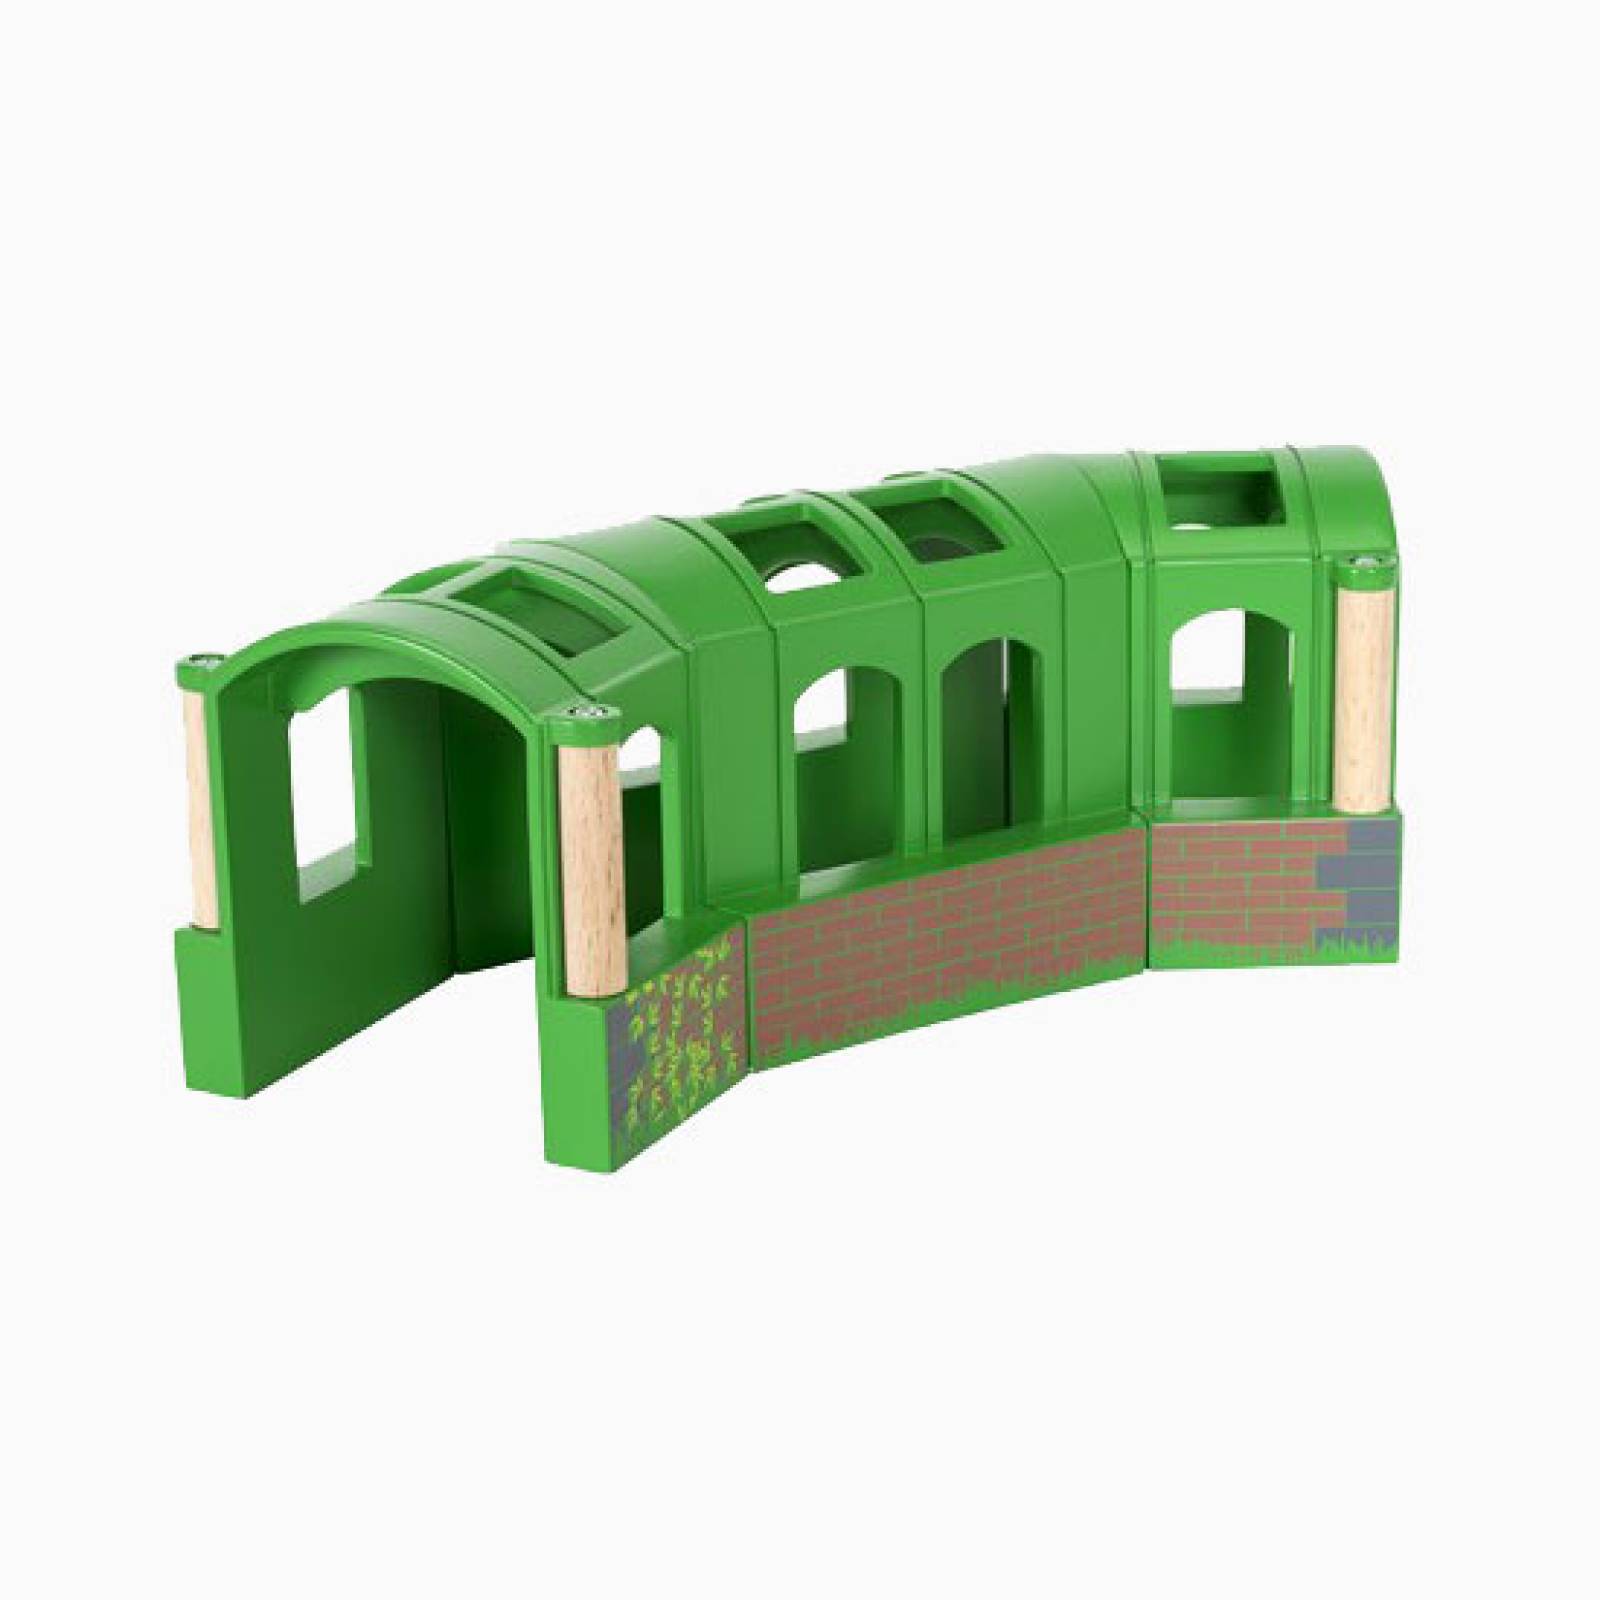 Flexible Tunnel BRIO Wooden Railway Age 3+ thumbnails